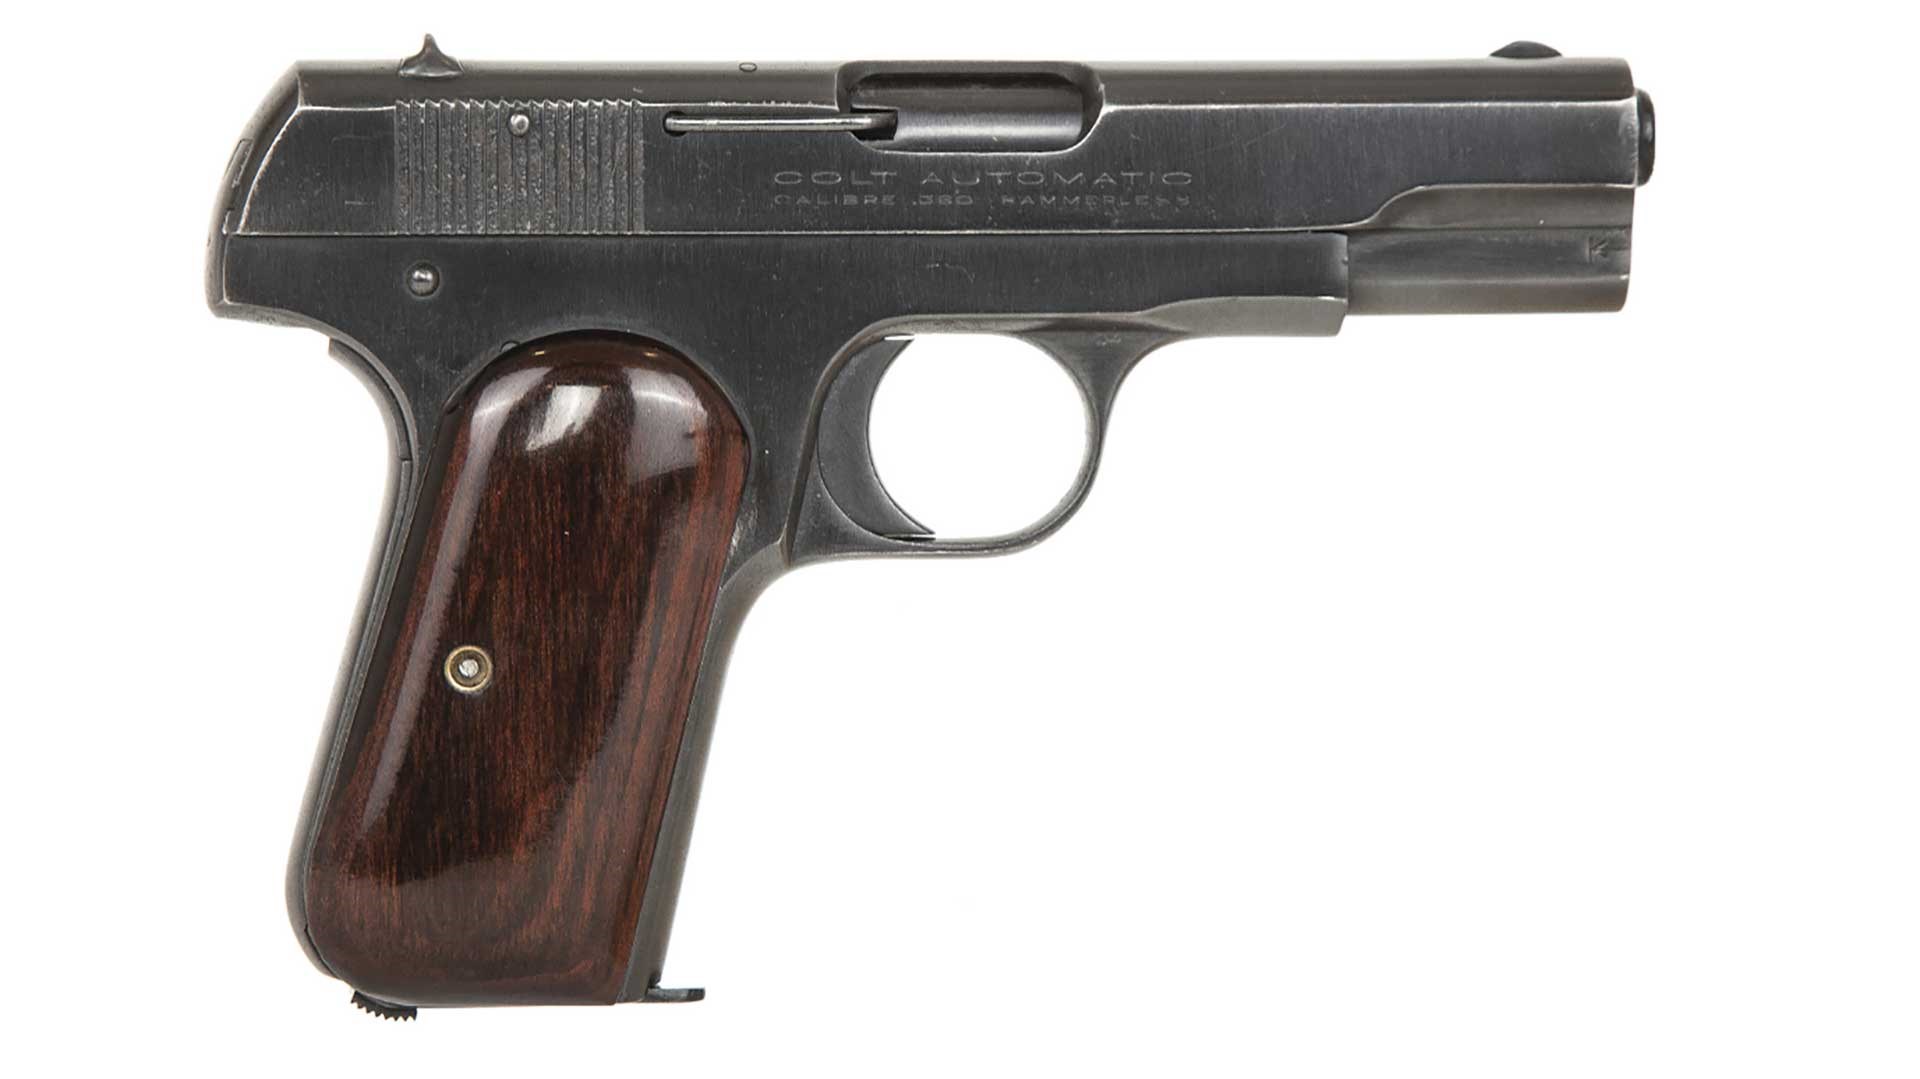 A standard Colt Model 1908 Pocket Hammerless belonging to Al Capone shown on white.